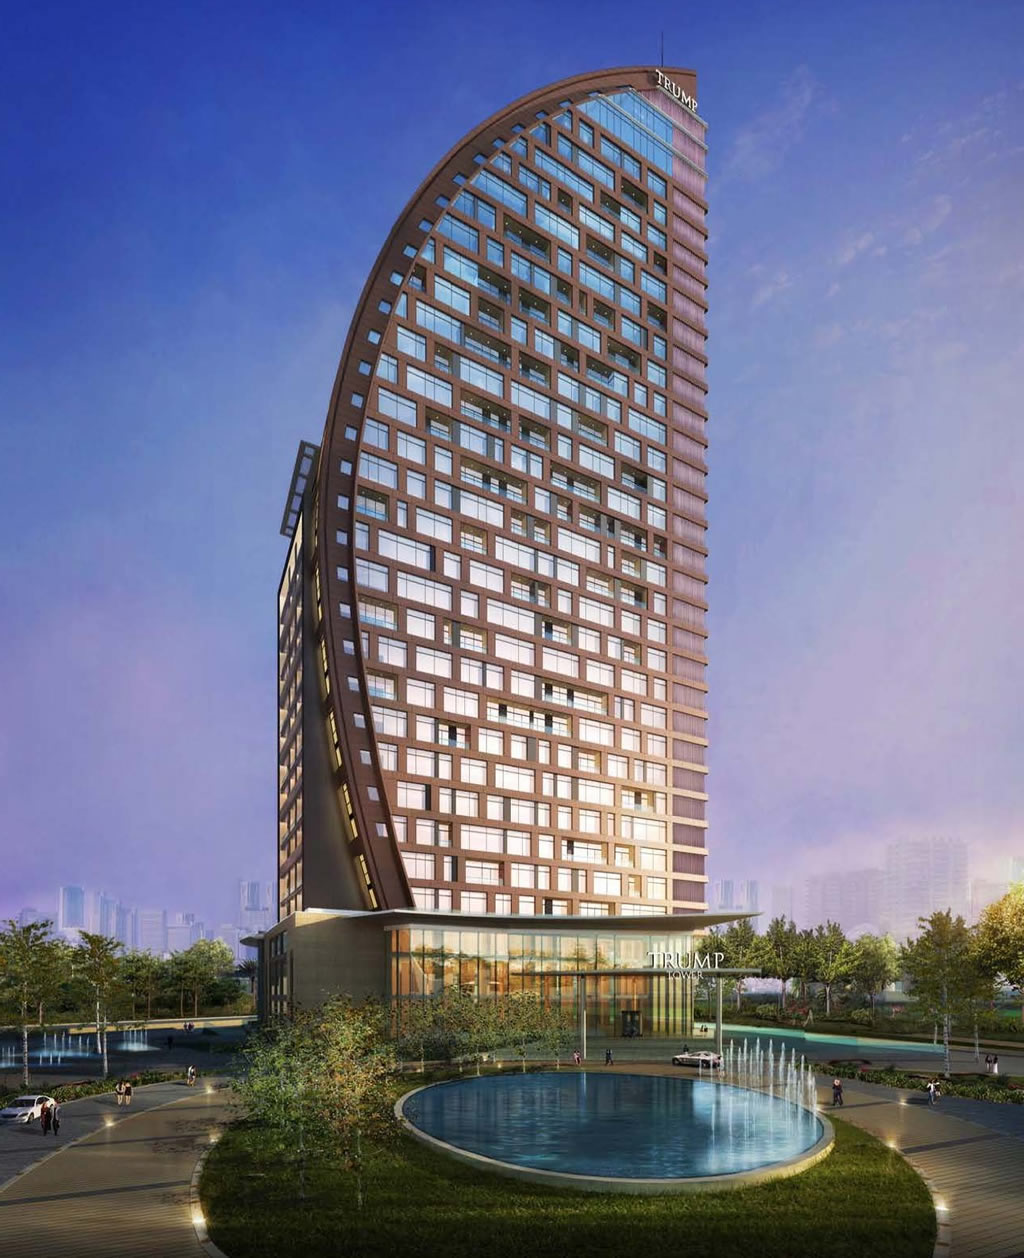 The Trump Hotel – all ready to make Baku its home